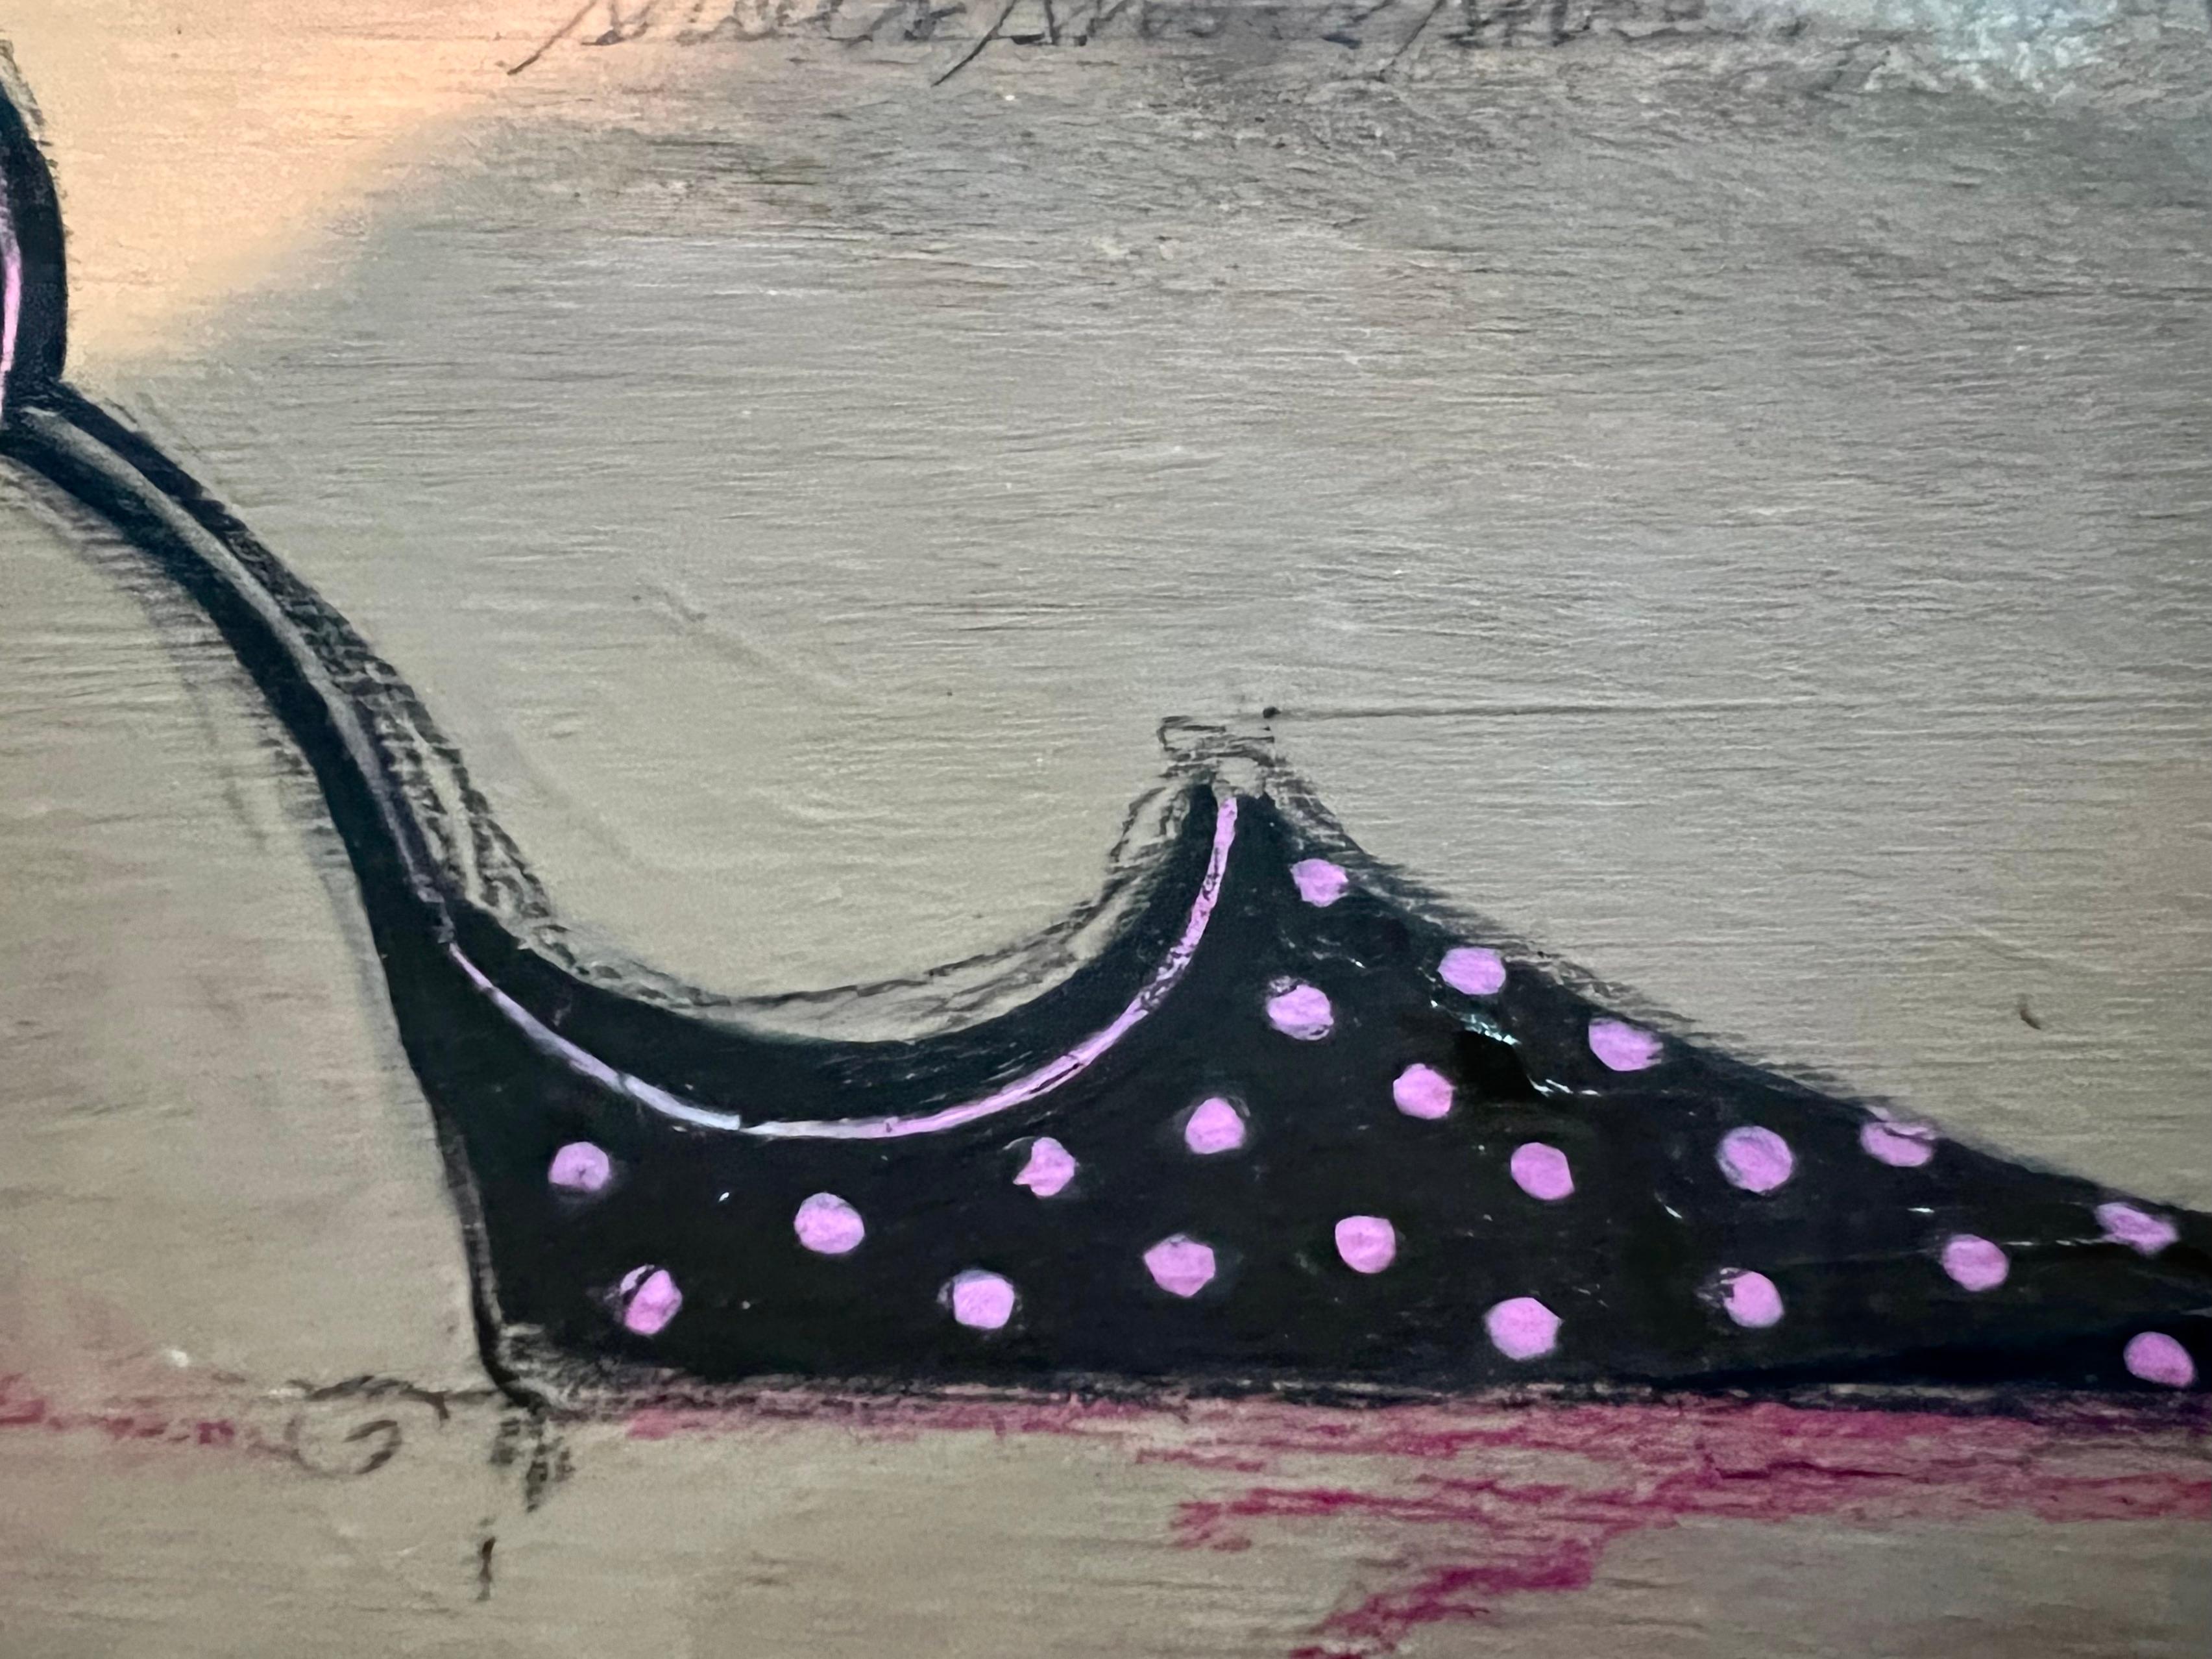 I Love Shoes - 5 (8.25”x9.25”, framed, black, beige, pink, part of series) - Gray Still-Life by Andrea Stajan-Ferkul